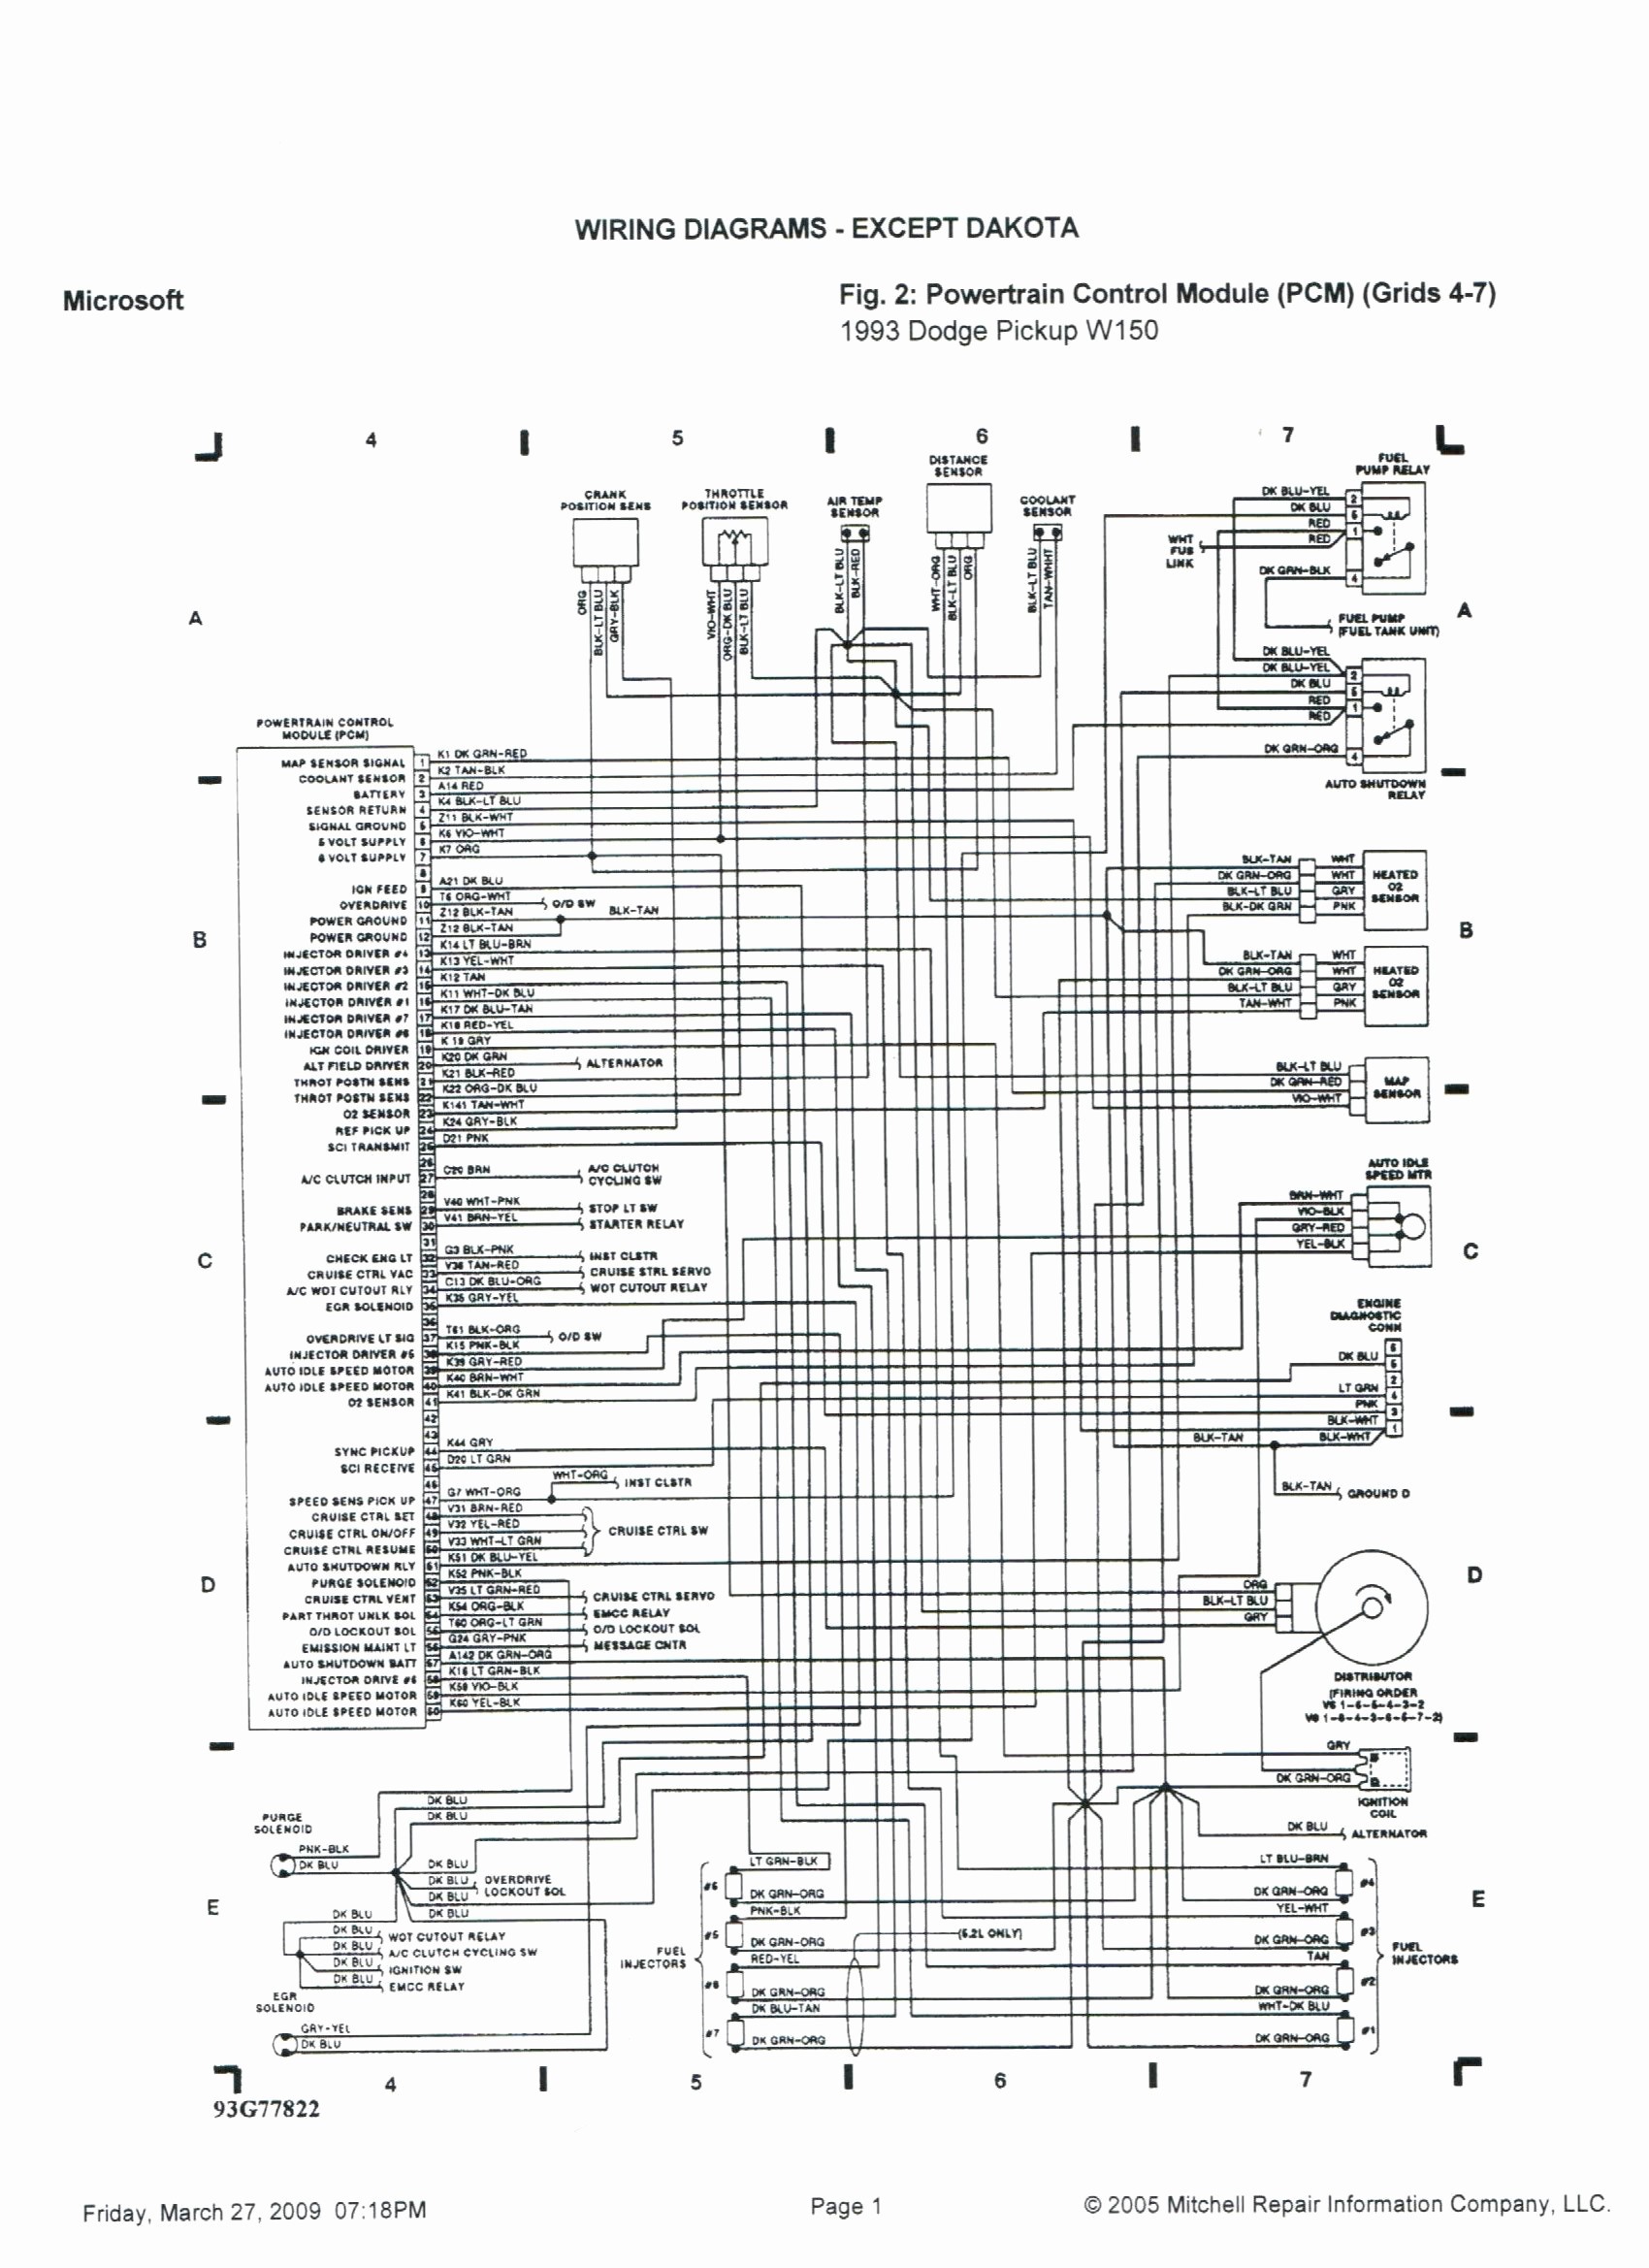 Wiring Diagram for Caravan New Wiring Diagram Furthermore 1998 Dodge Dakota V6 Engine Diagram